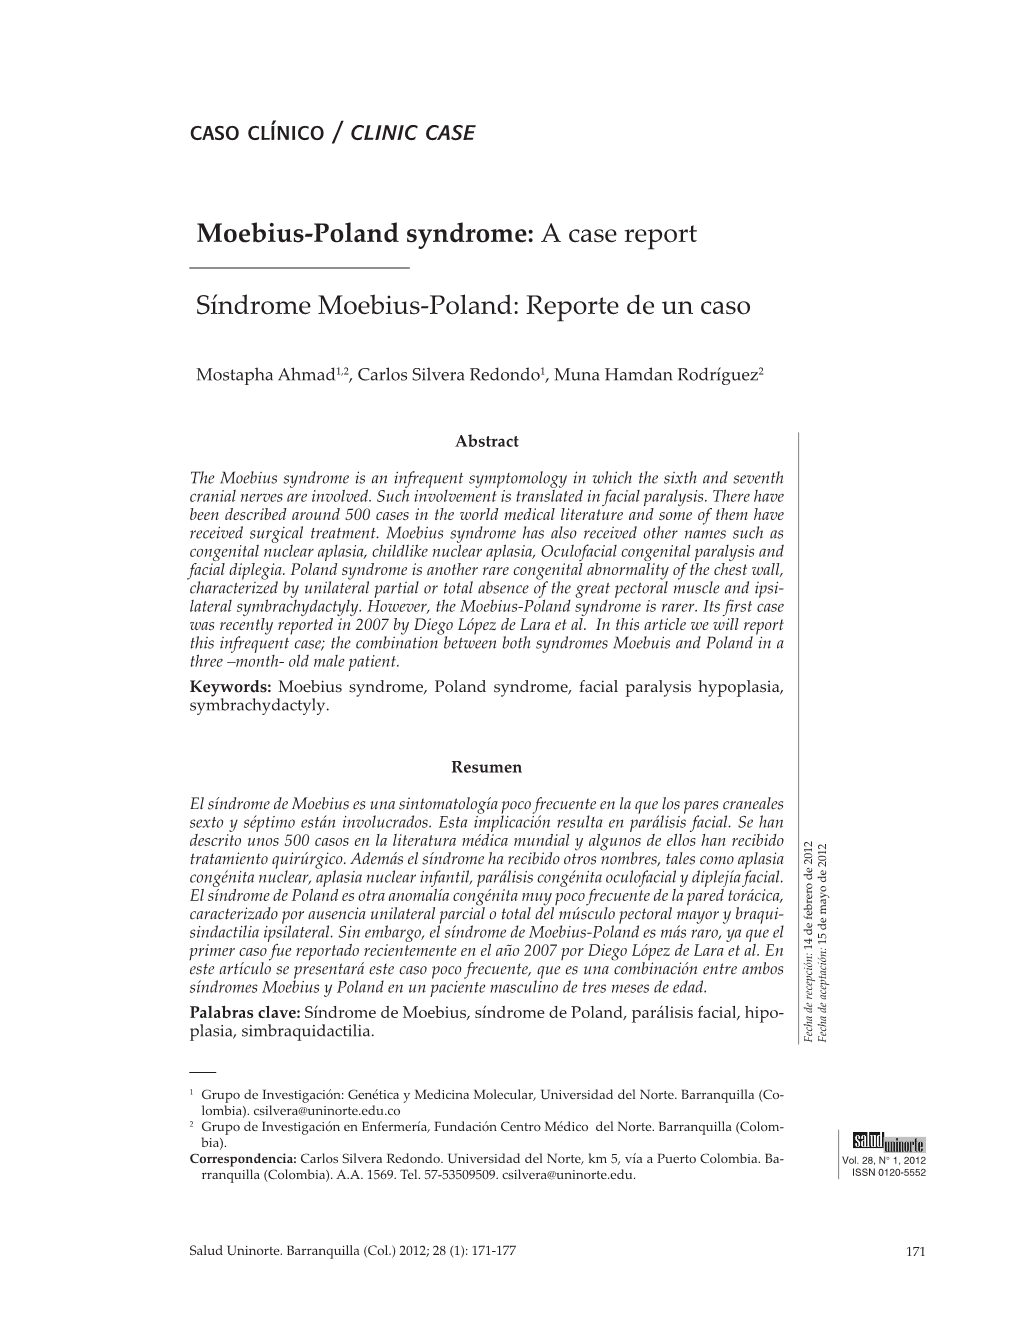 Moebius-Poland Syndrome: a Case Report